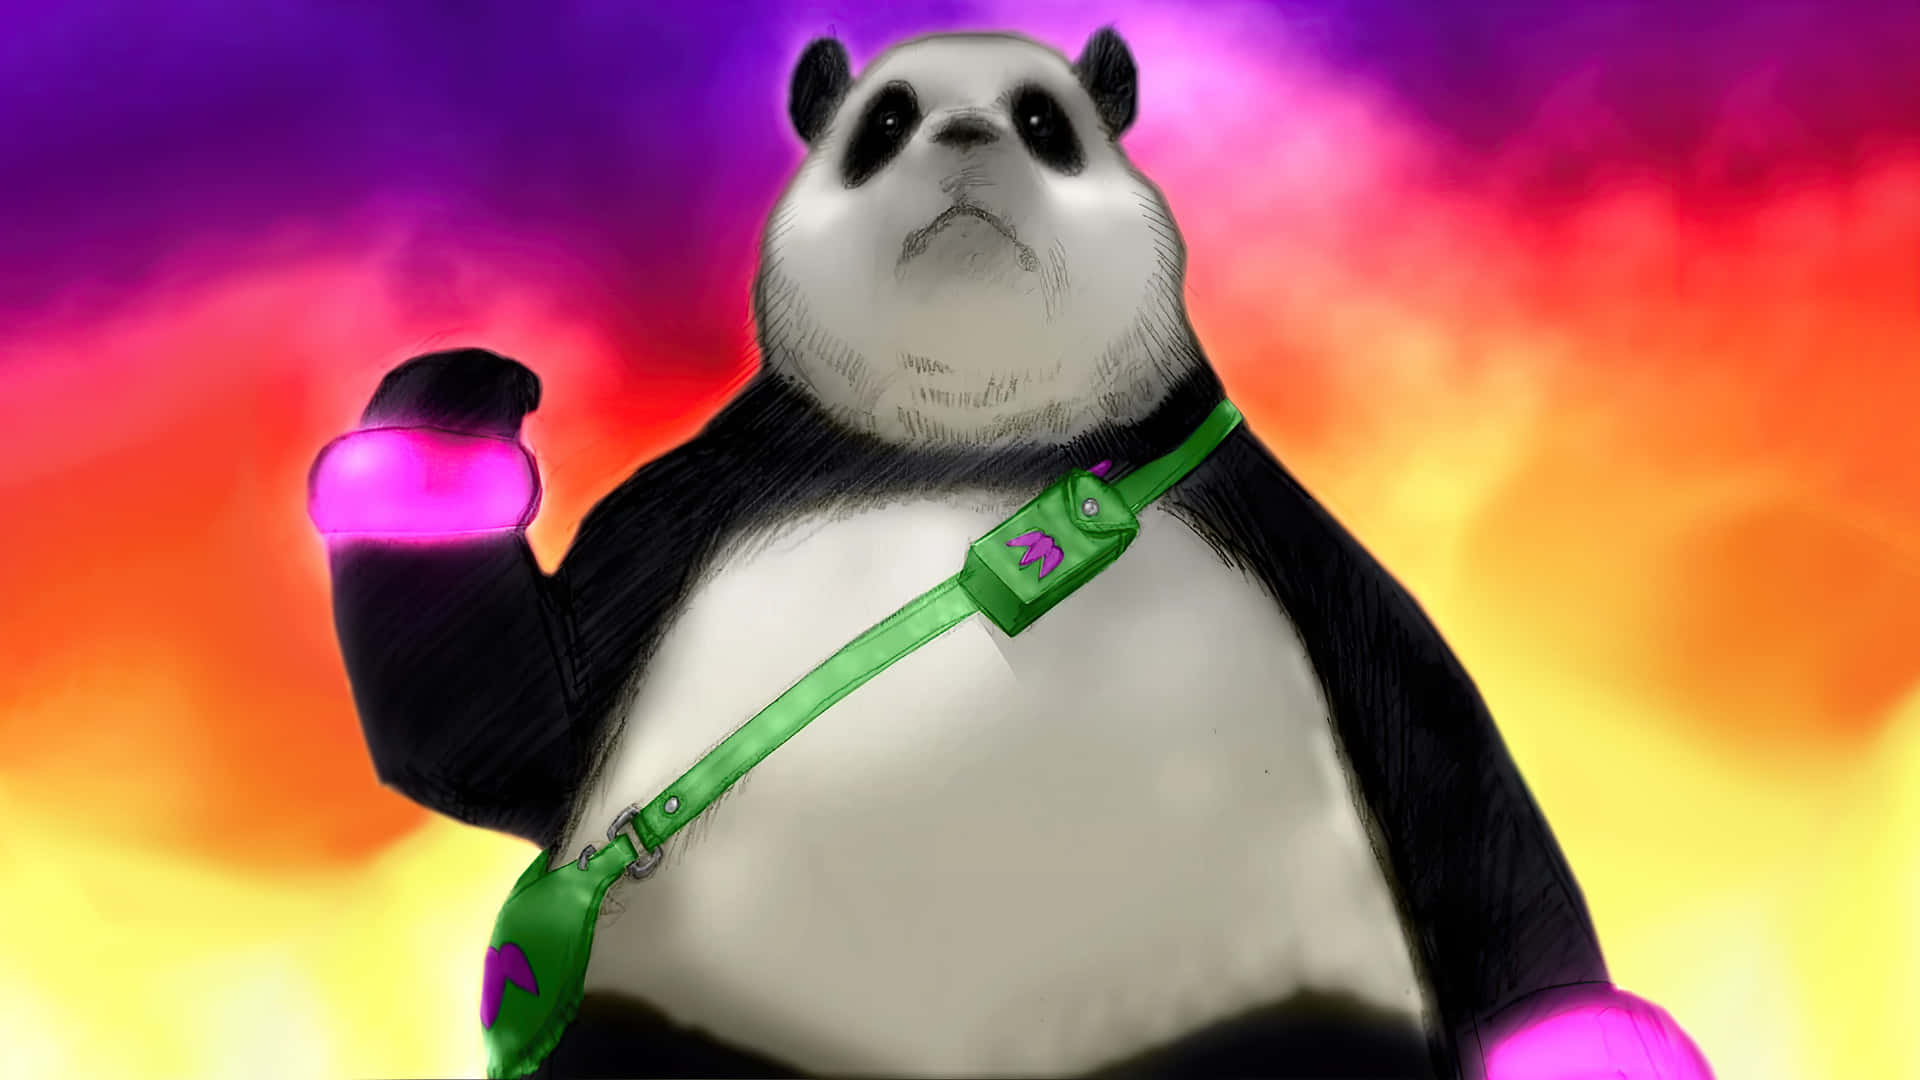 Giant Panda Wearing Green Bag Background